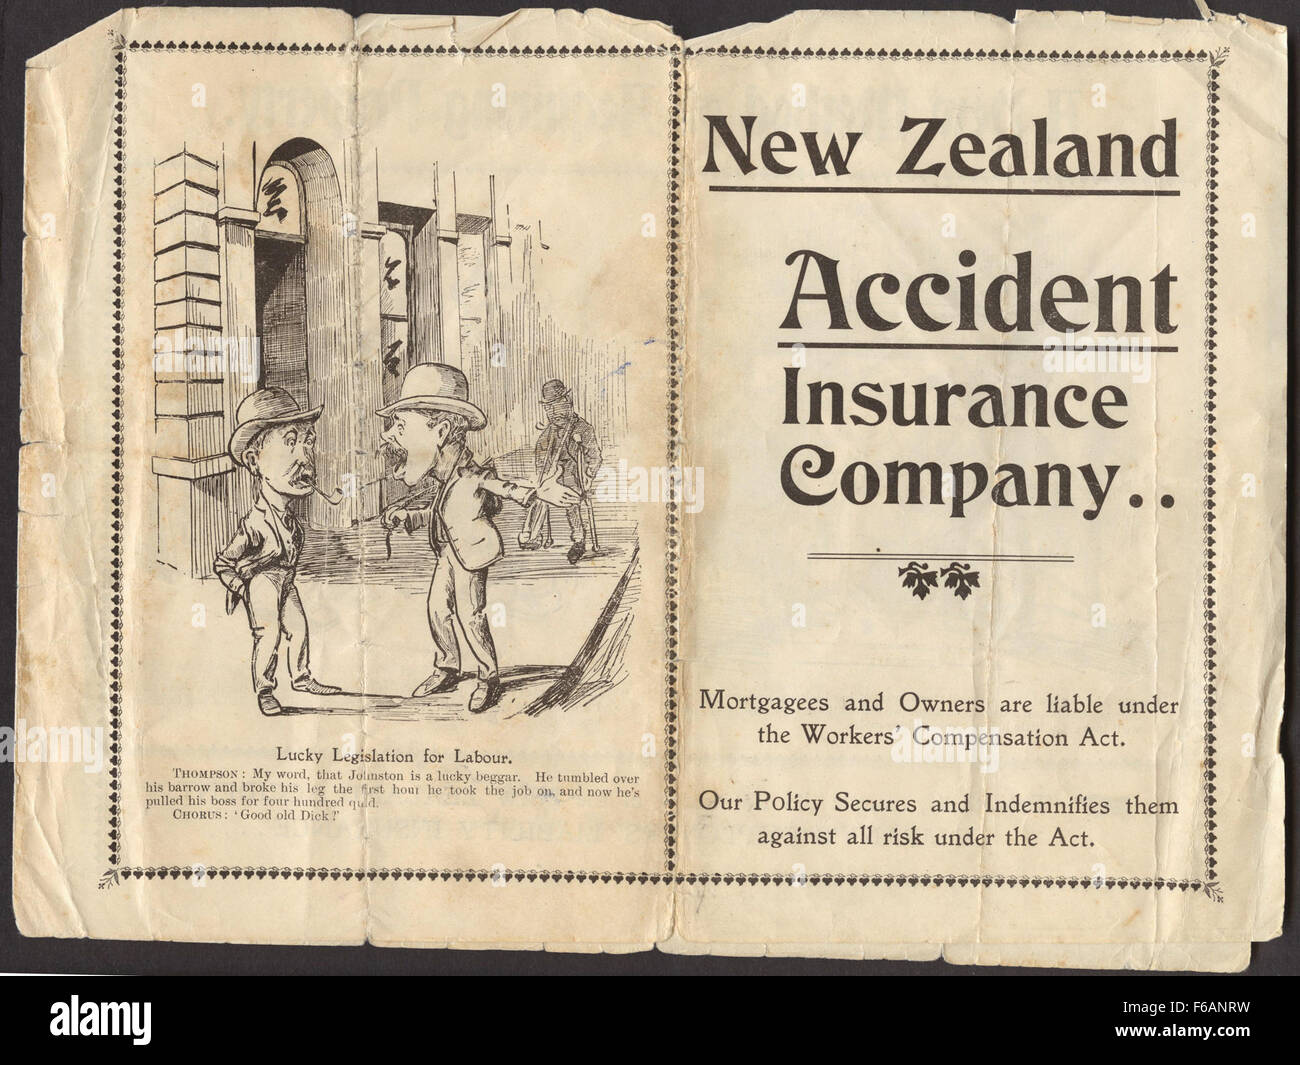 New Zealand Accident Insurance Company New Zealand Accident Insurance Company Stock Photo - Alamy